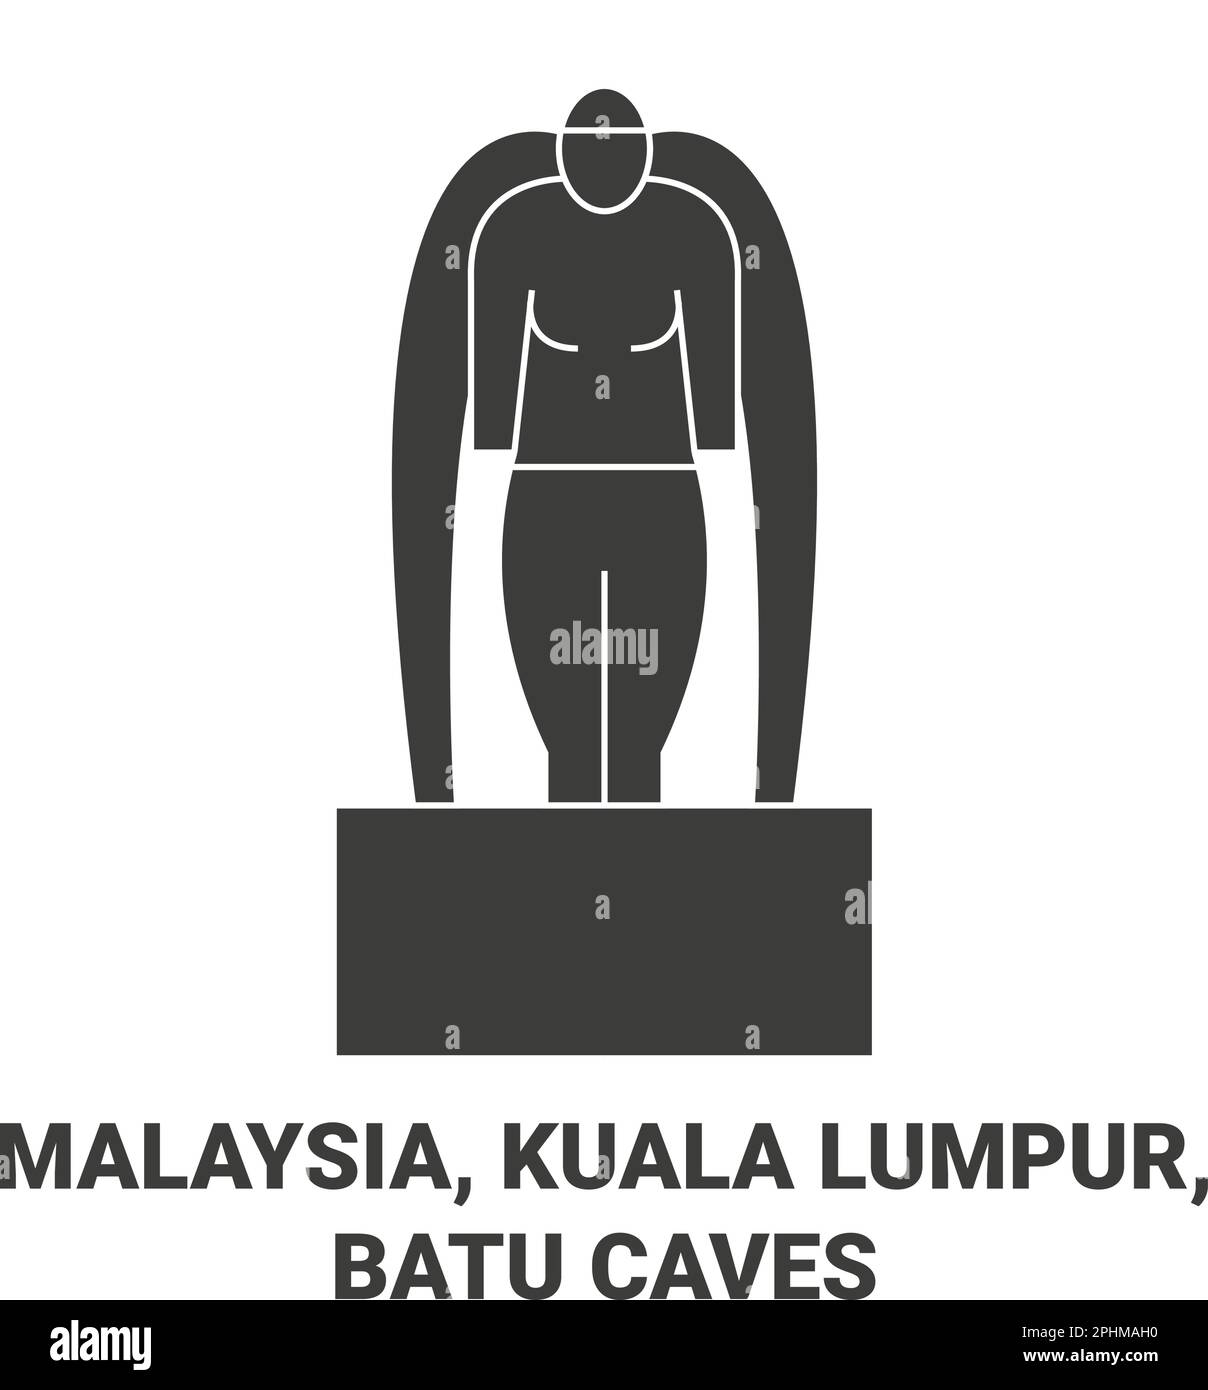 Malaysia, Kuala Lumpur, Batu Caves travel landmark vector illustration Stock Vector